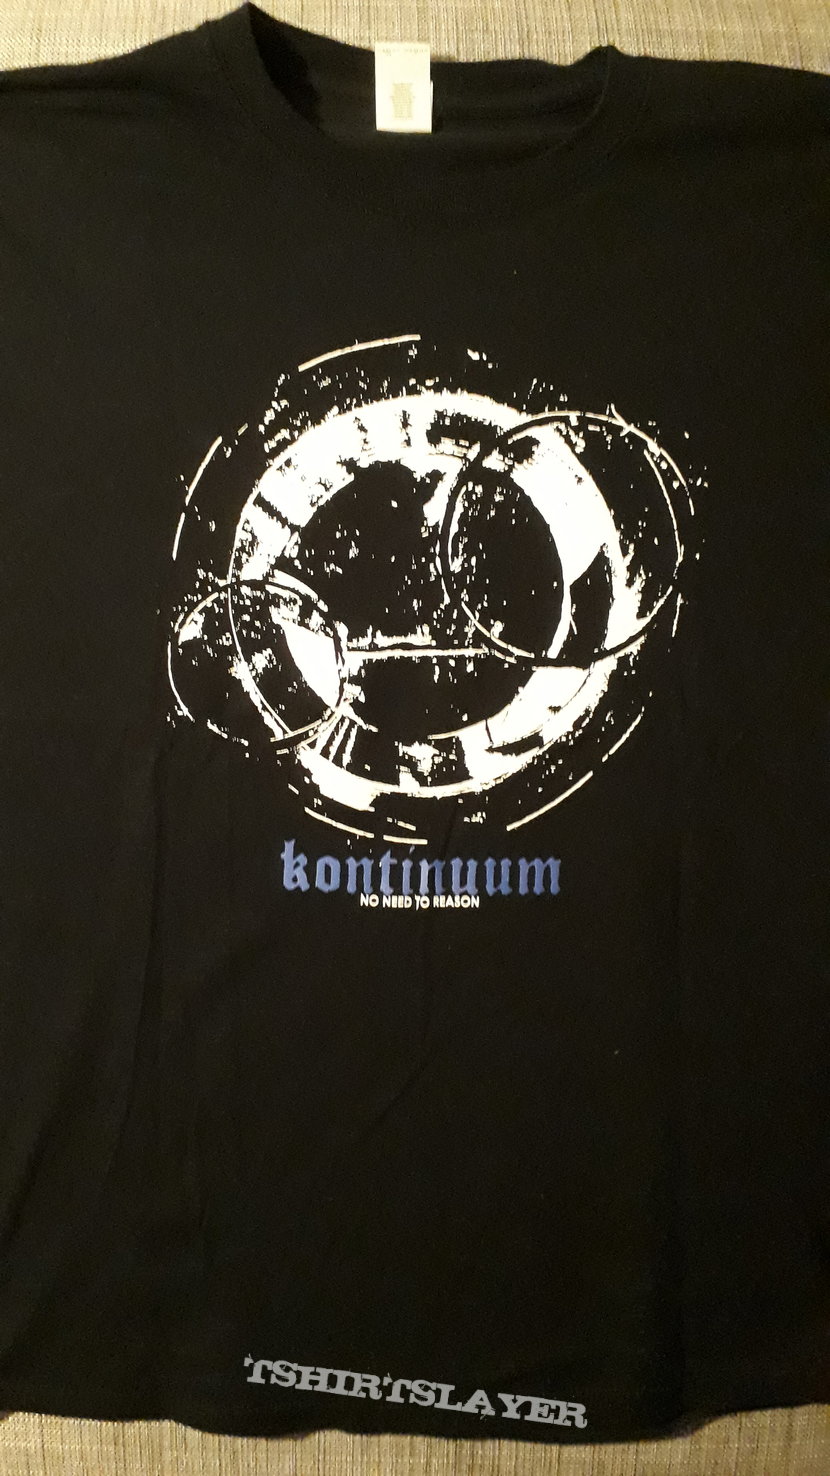 Kontinuum - No Need to Reason